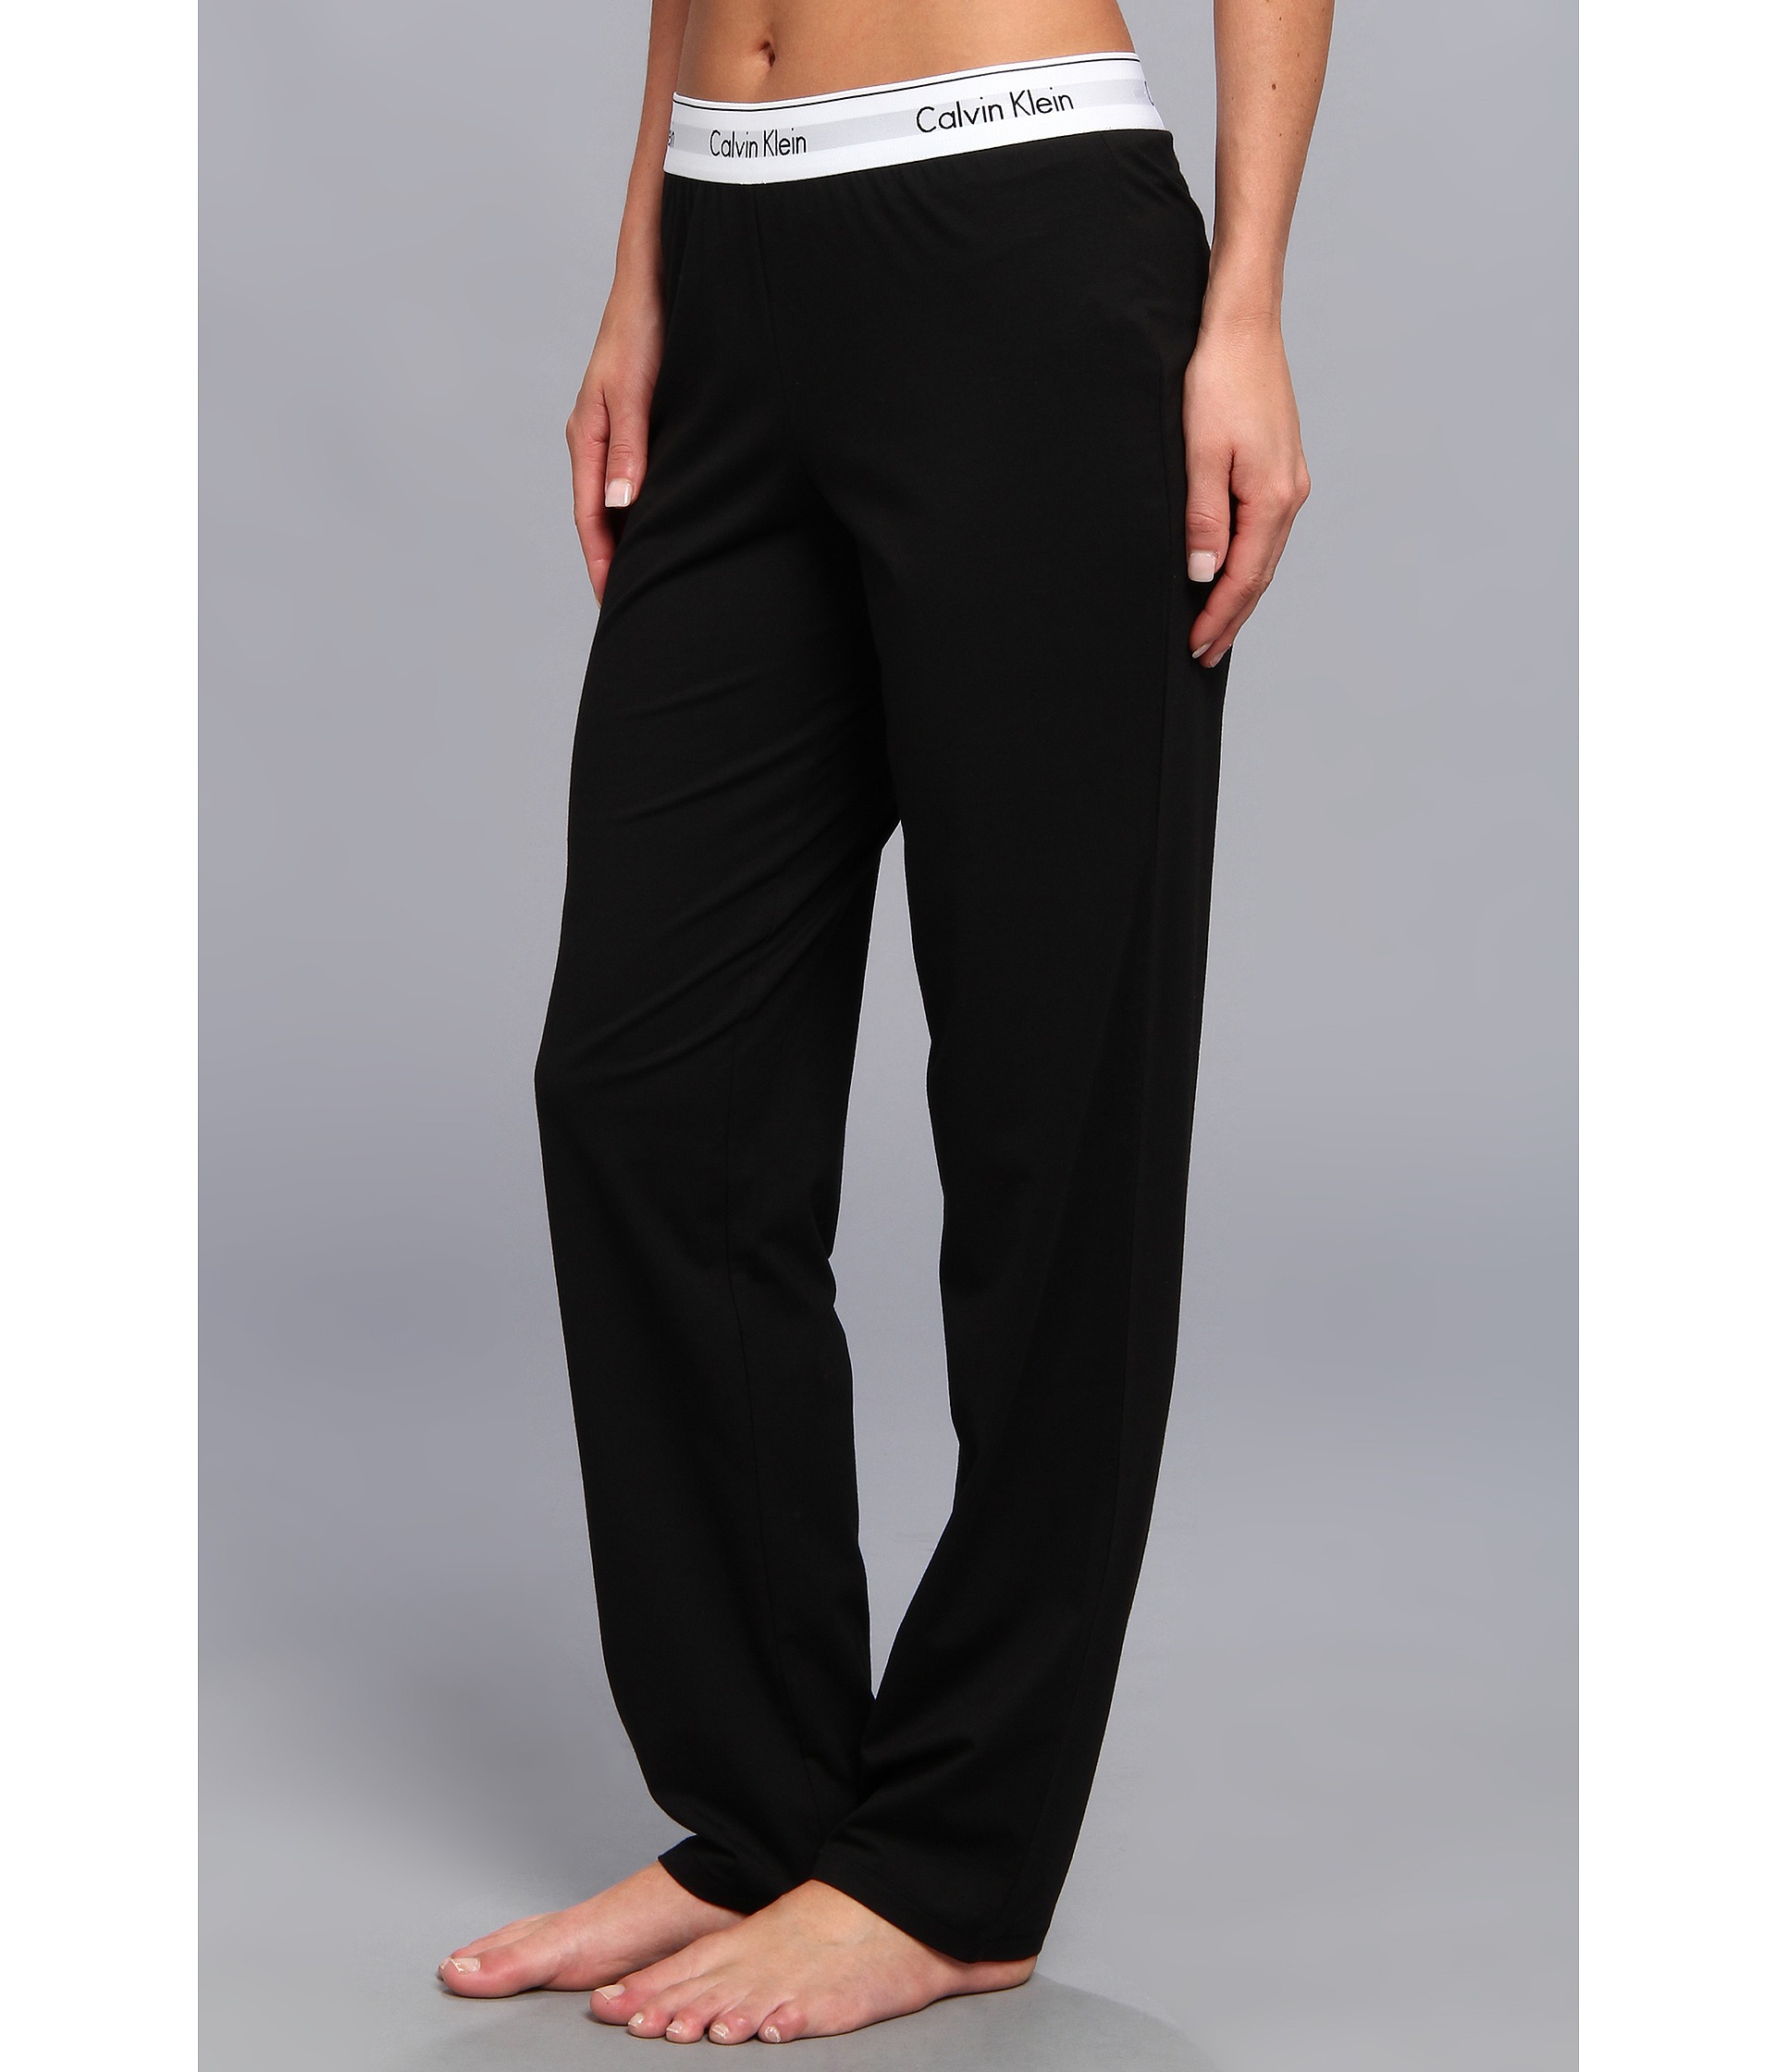 Calvin Klein Underwear Modern Cotton Lounge Pant Black | Shipped Free ...